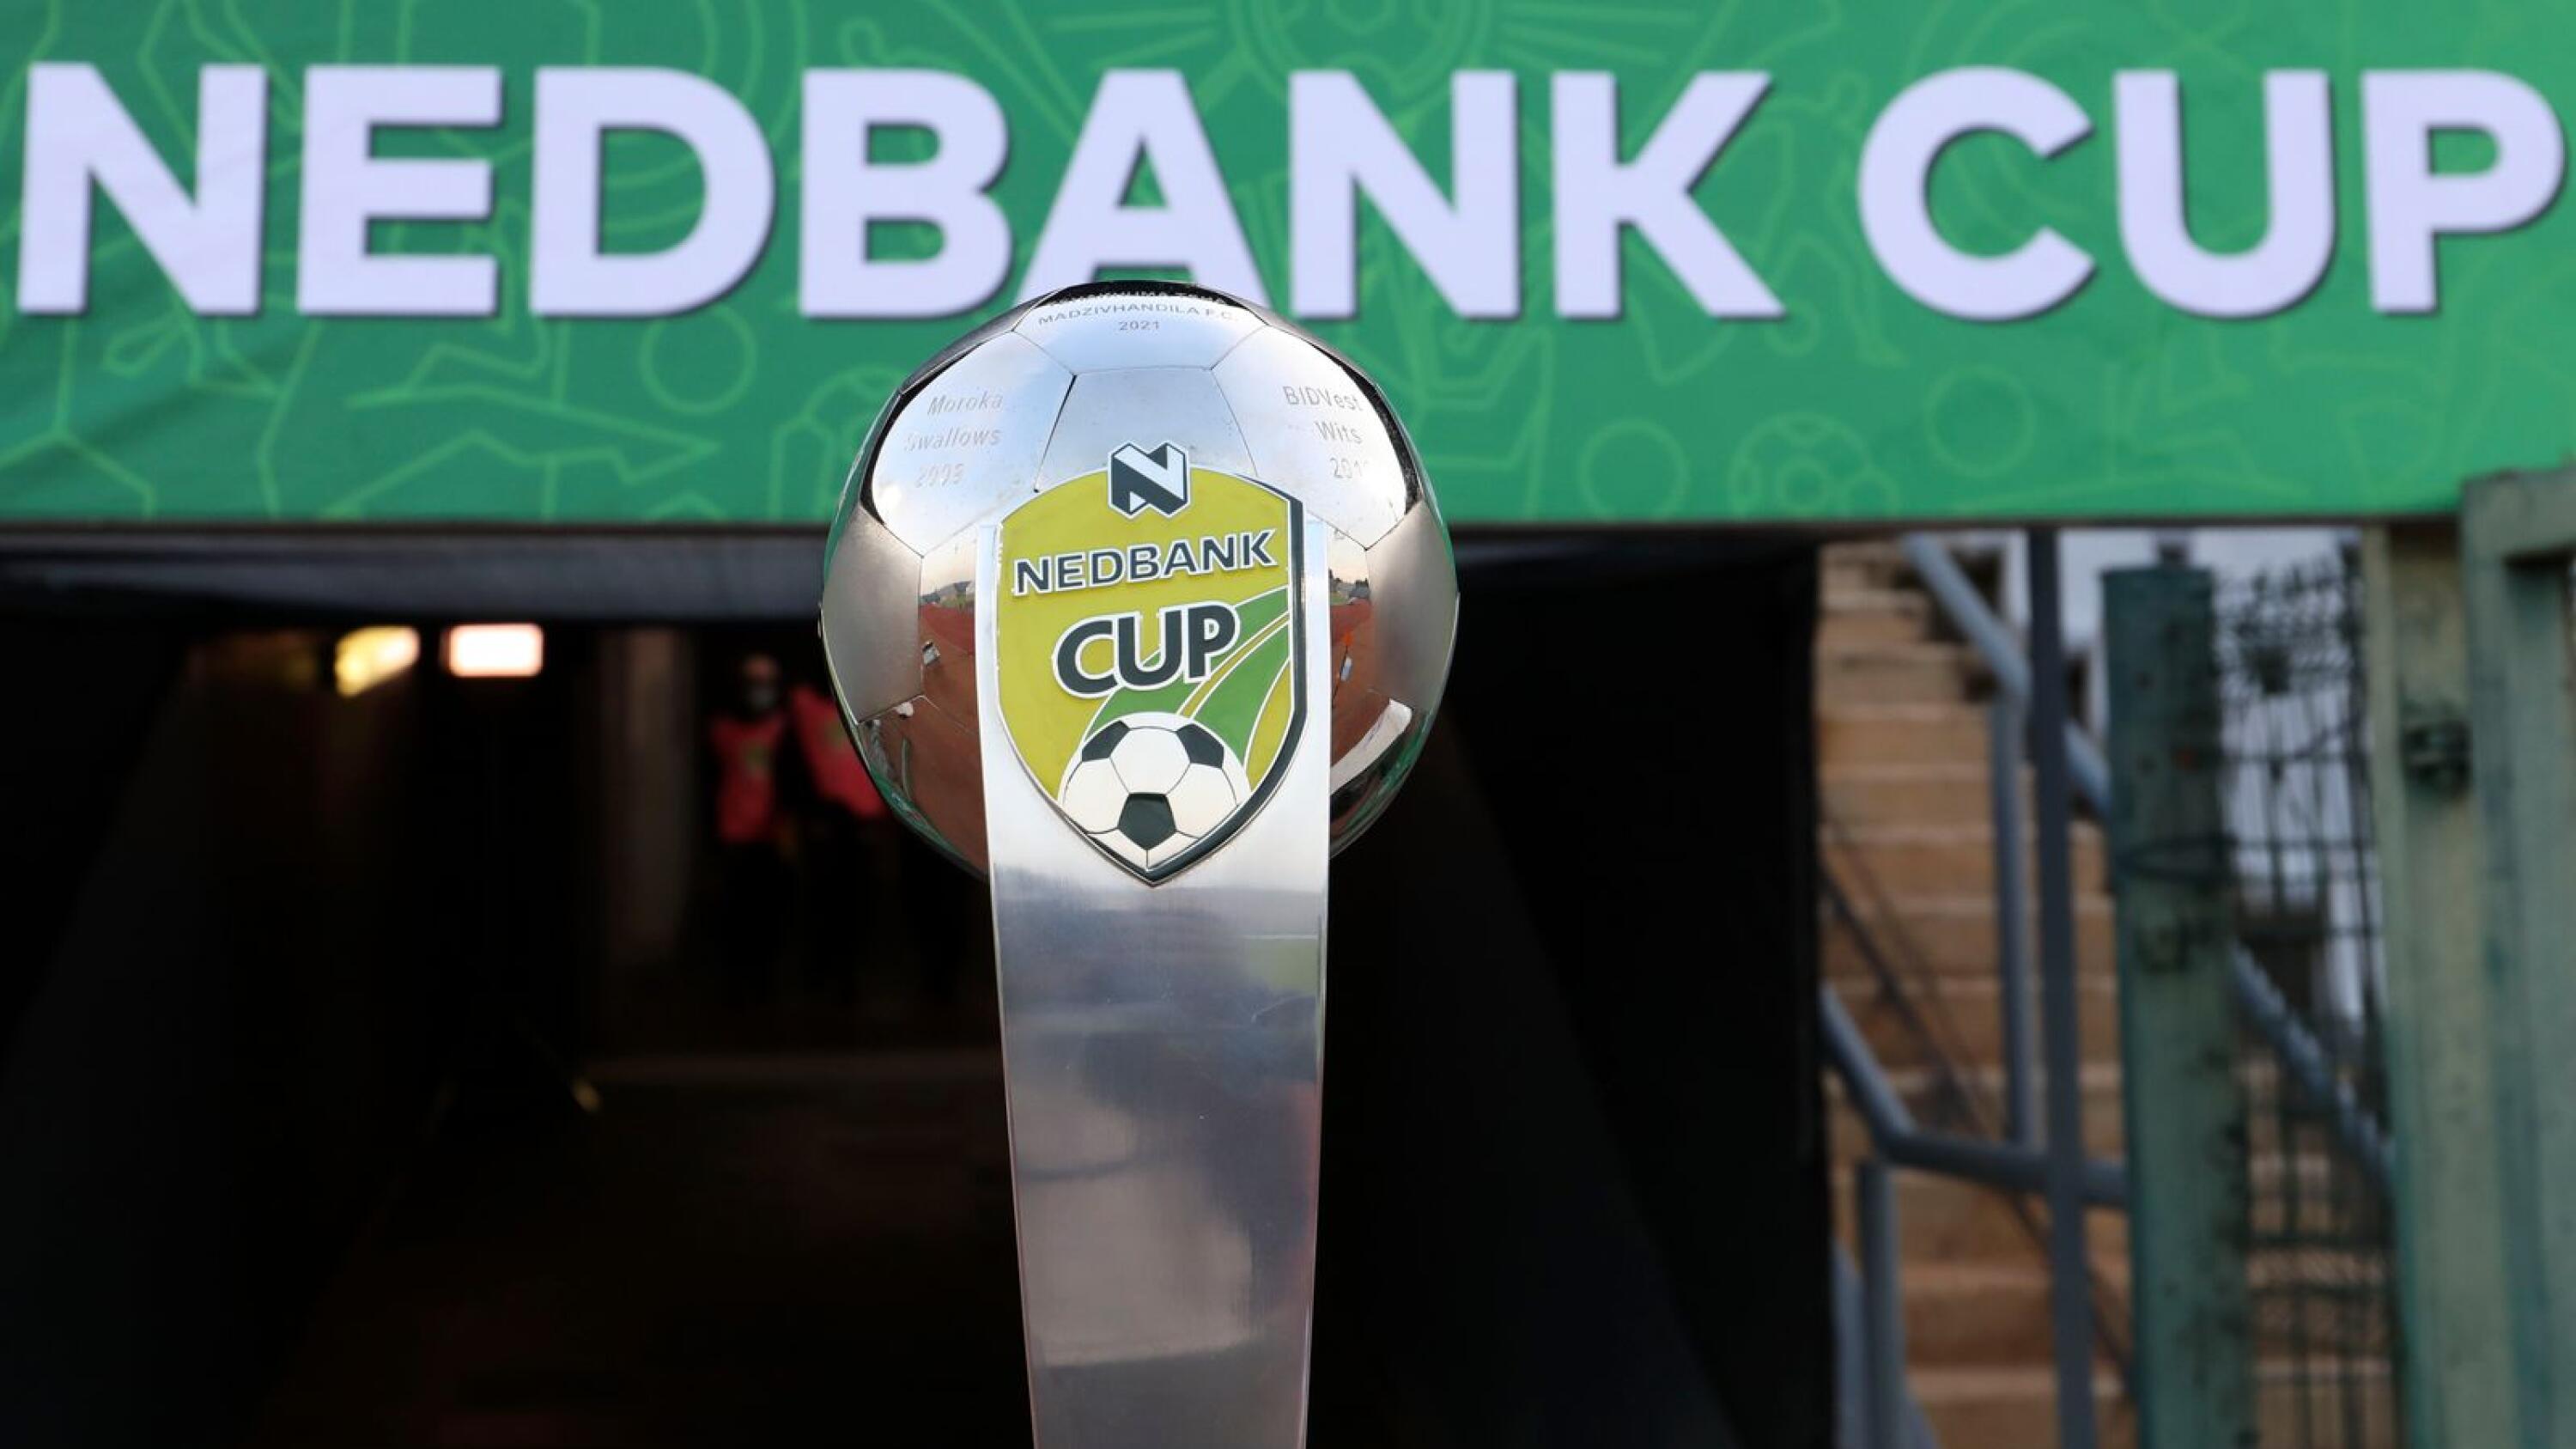 The Nedbank Cup on display.